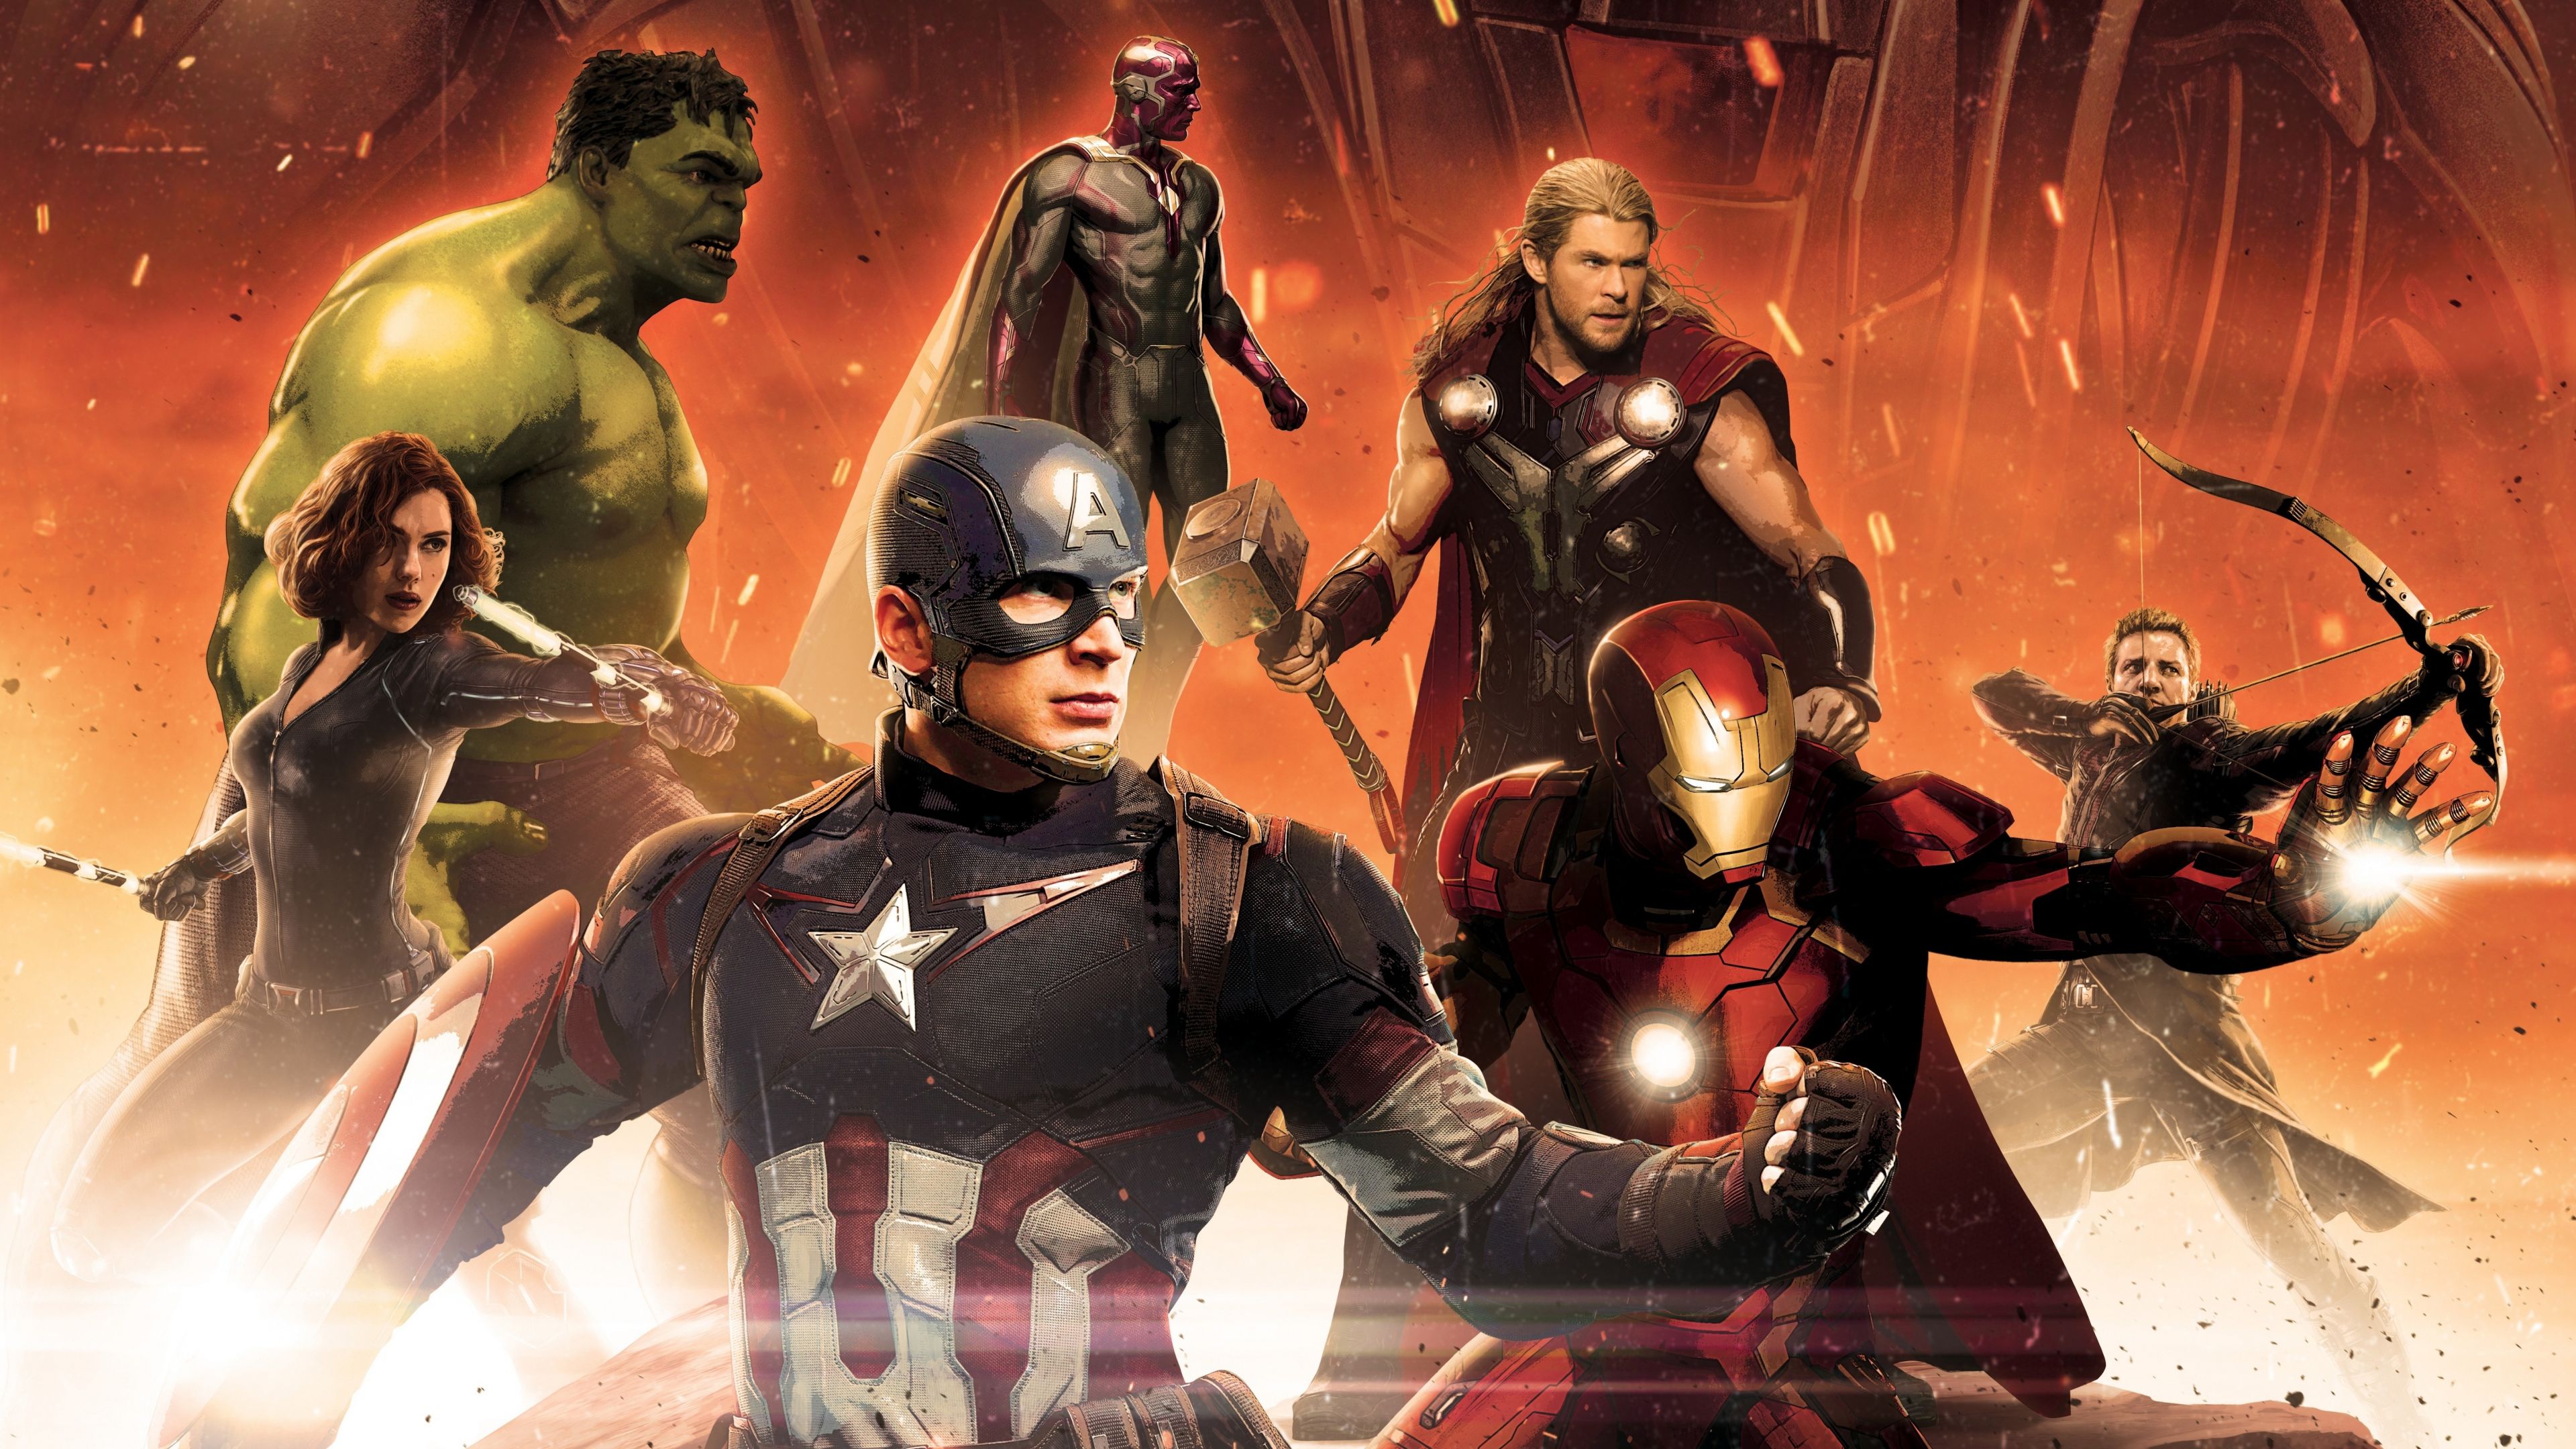 Download 3840x2160 wallpaper avengers: age of ultron, hulk, black widow, captain america, 4k, uhd 16: widescreen, 3840x2160 HD image, background, 4811